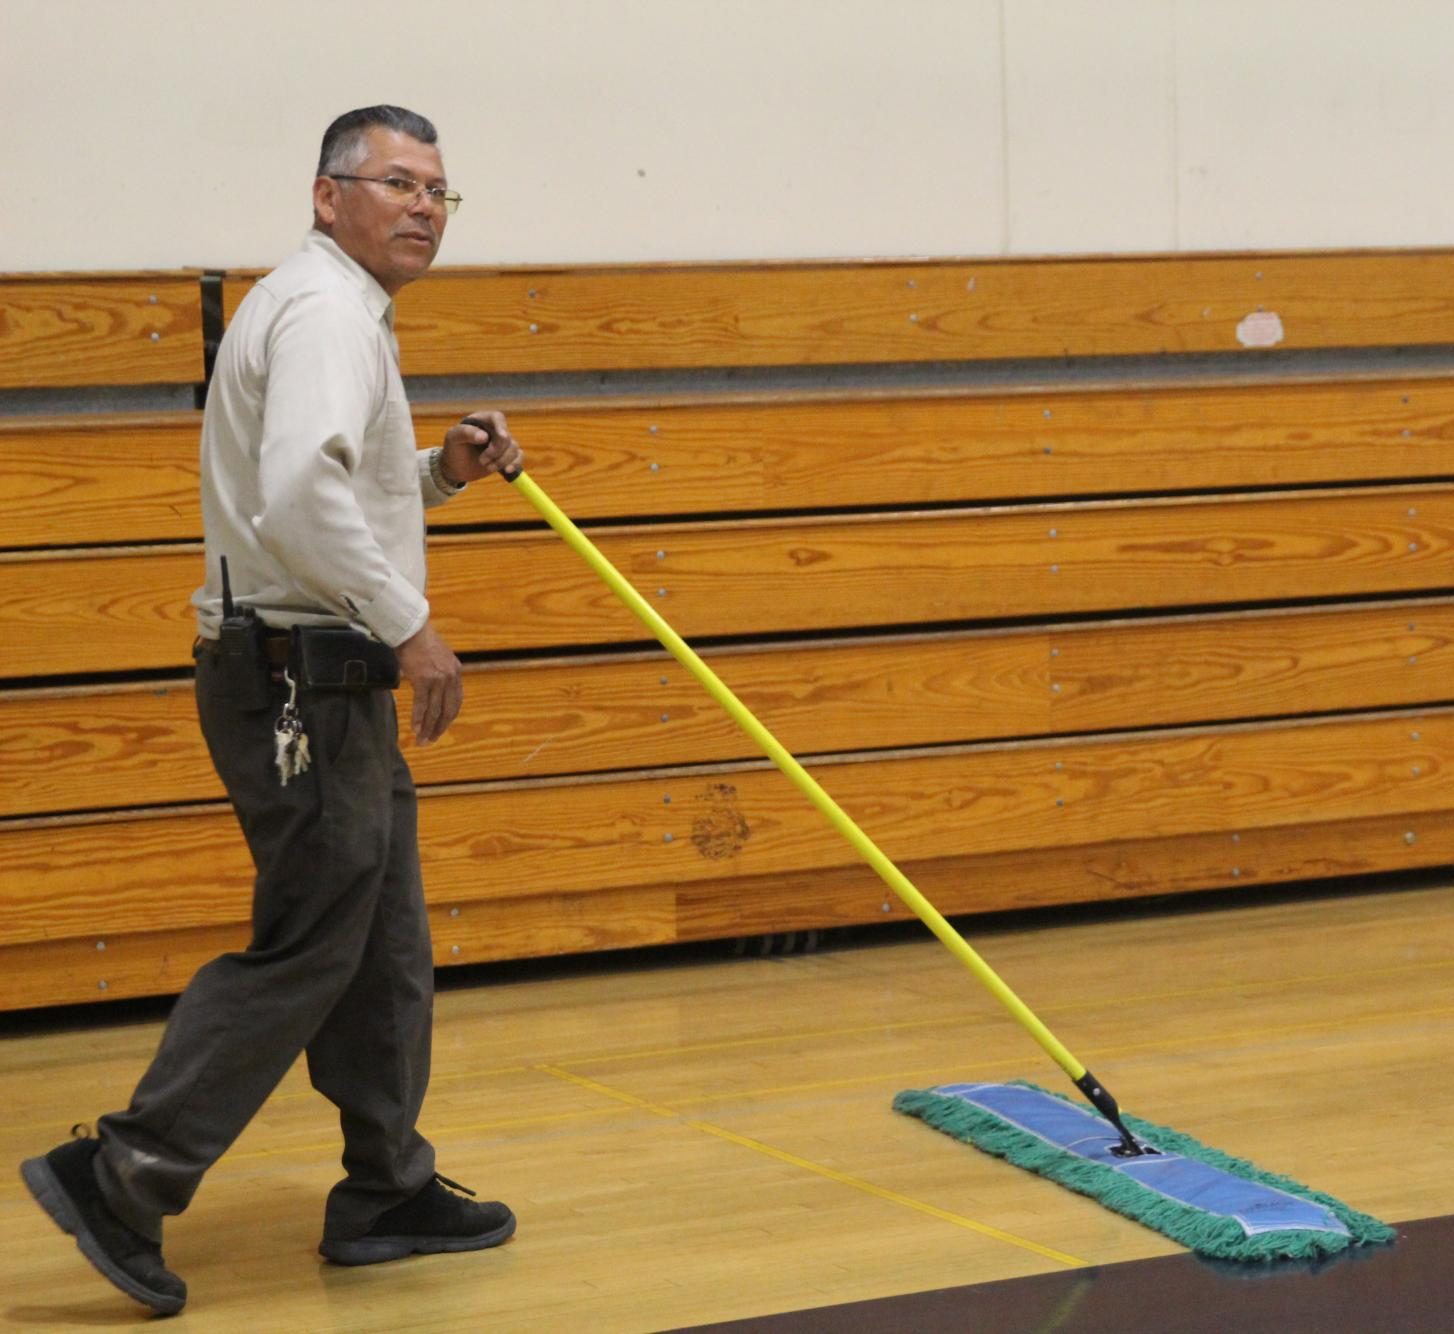 Hernandez mops the small gym floor